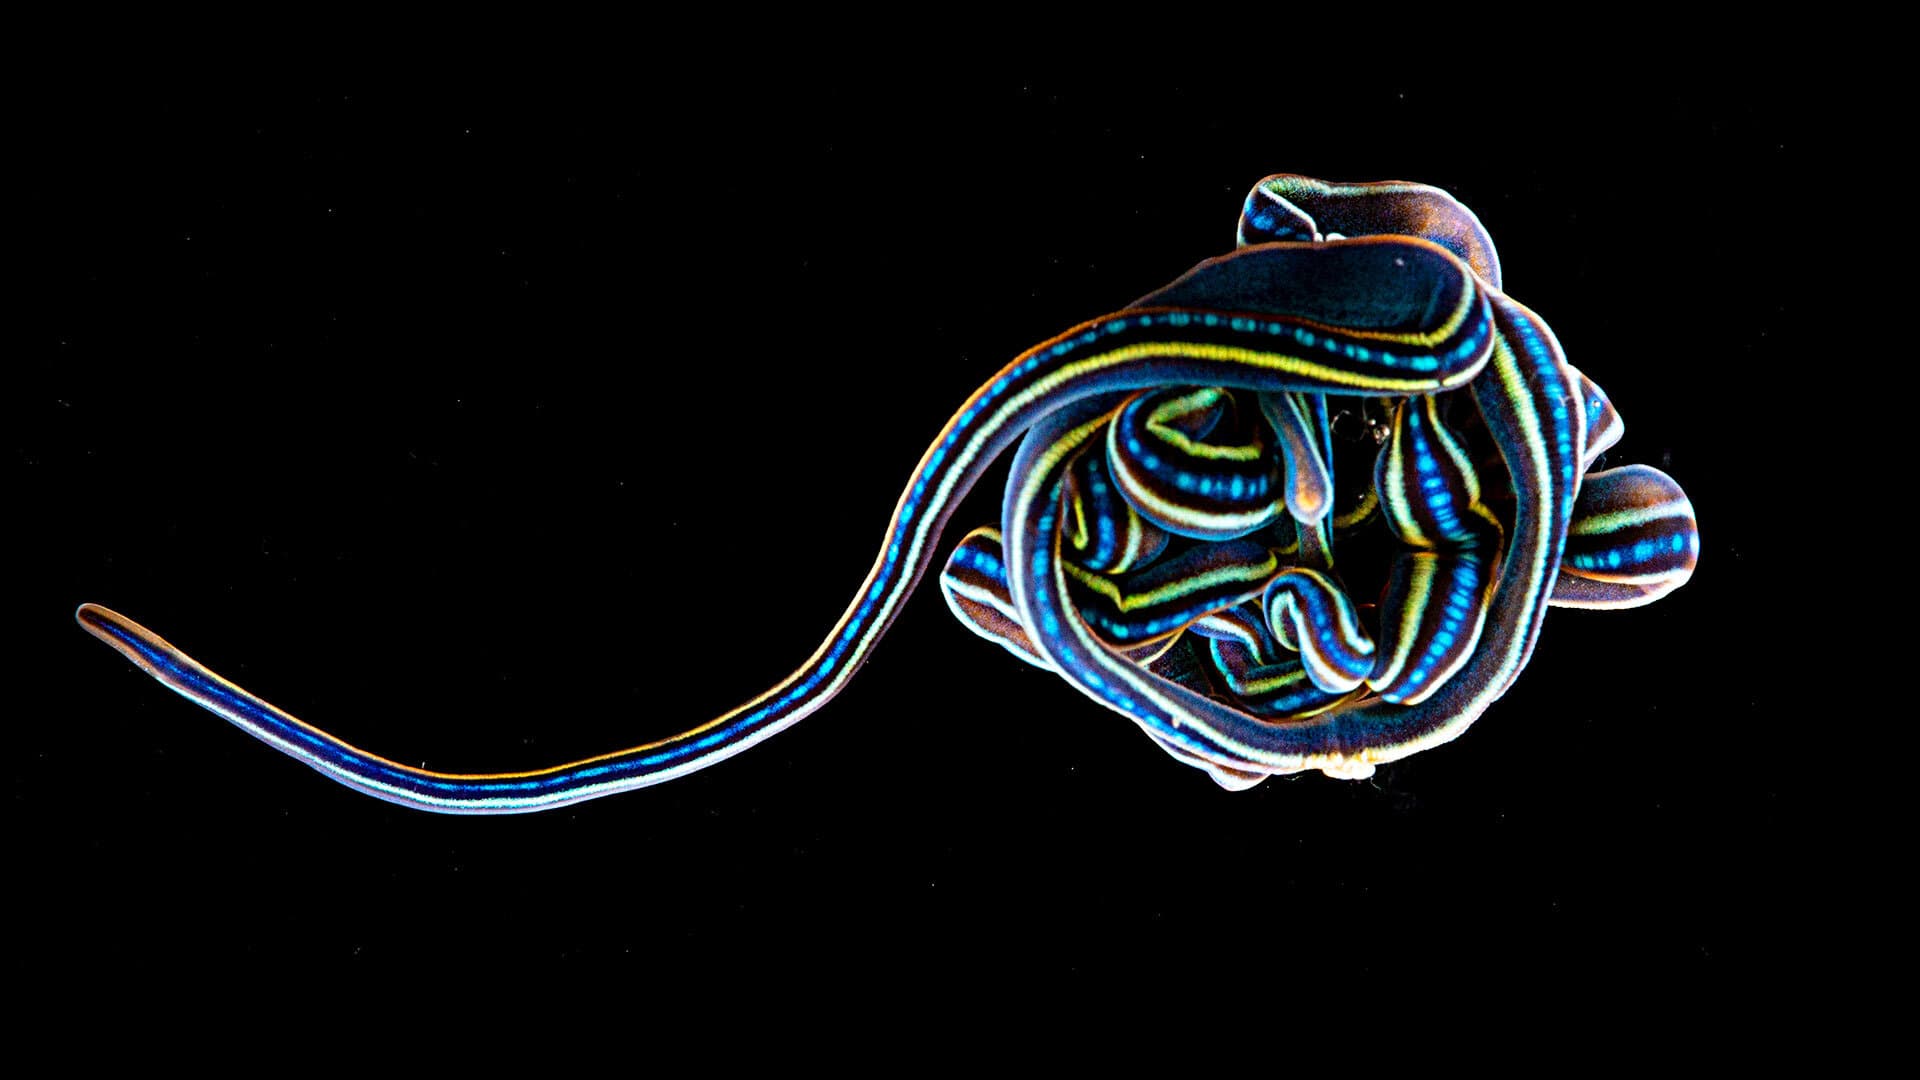 Marine ribbon worm